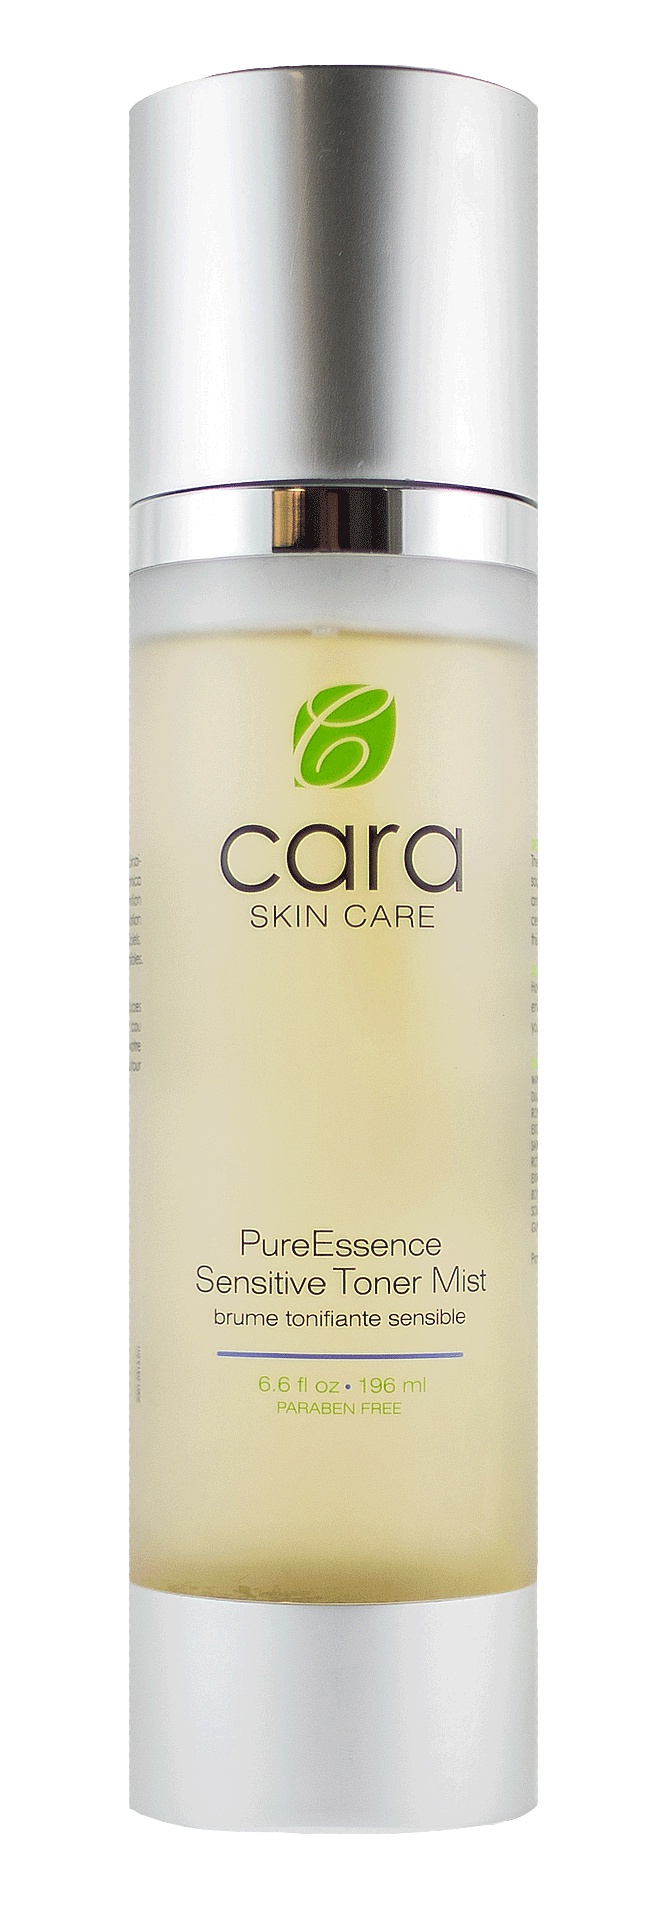 Cara Skin Care PureEssence Sensitive Toner Mist